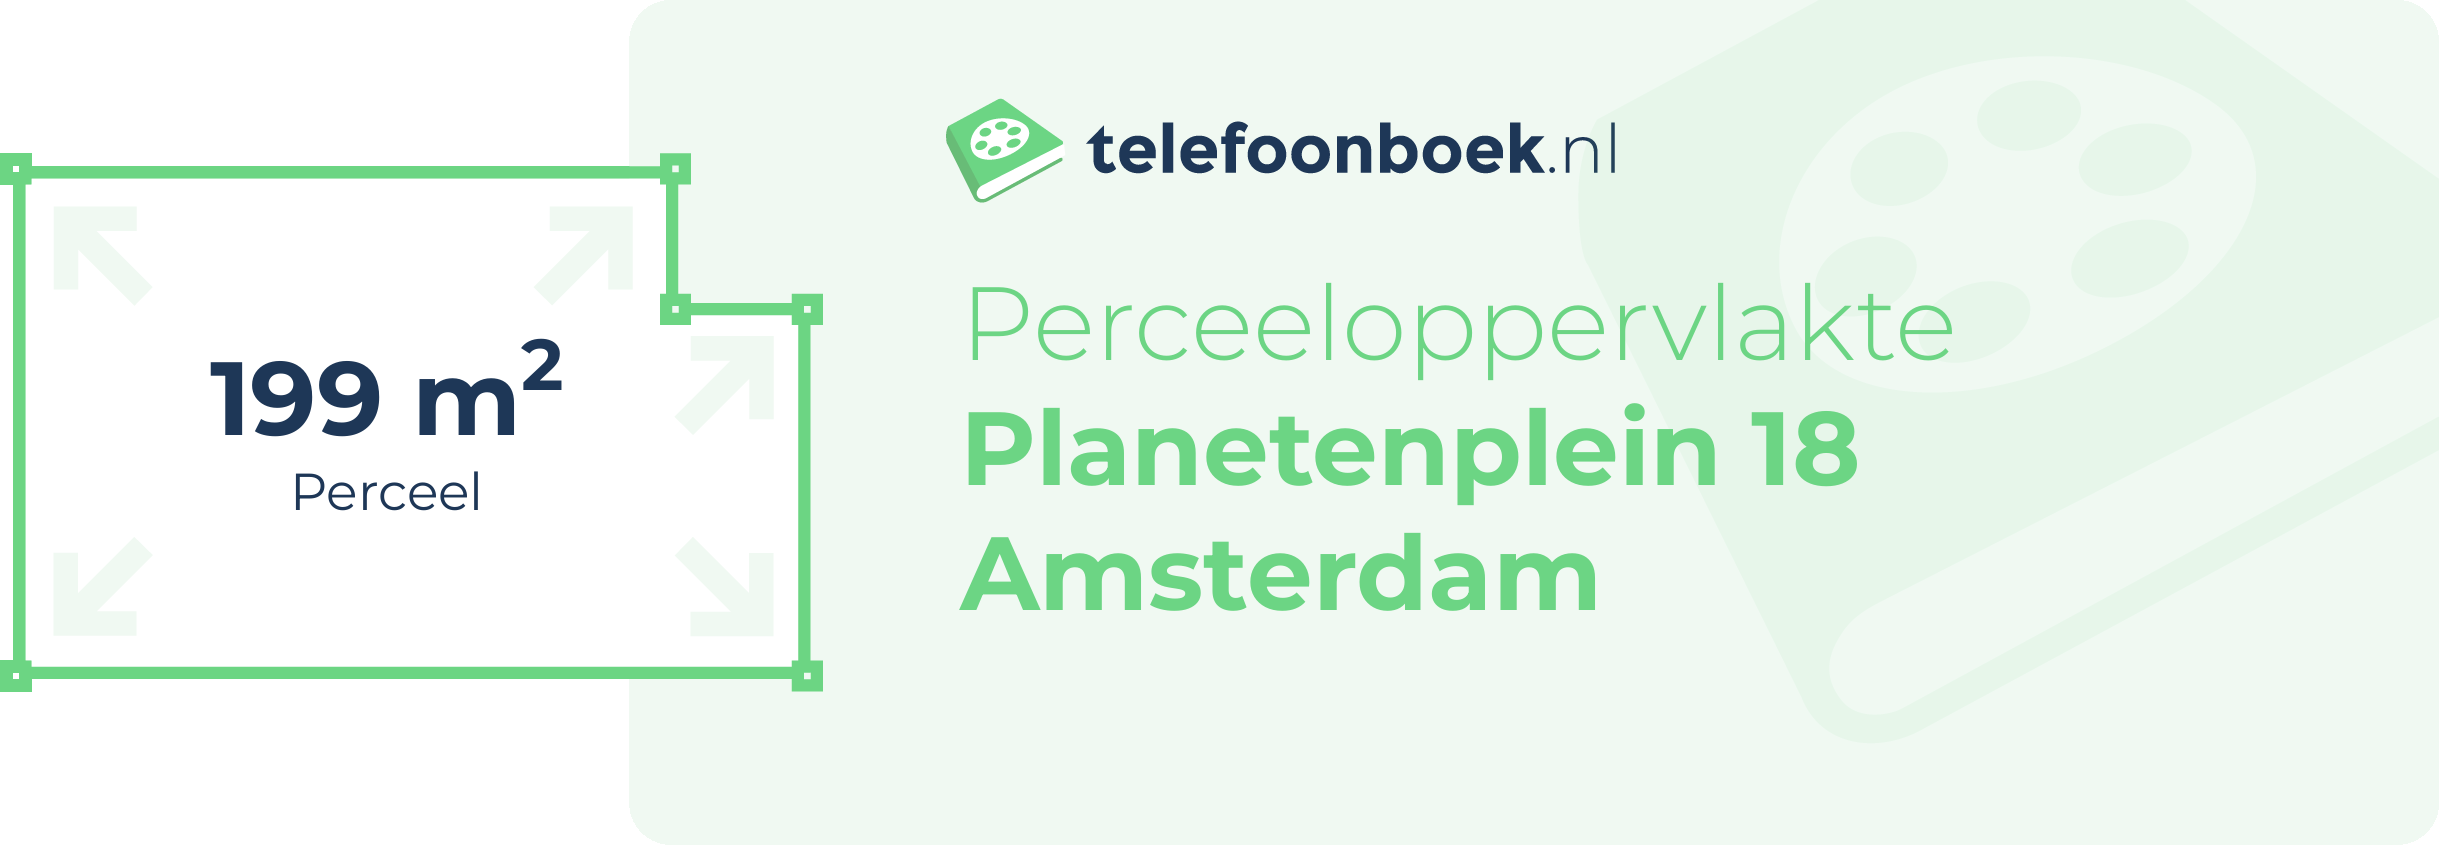 Perceeloppervlakte Planetenplein 18 Amsterdam